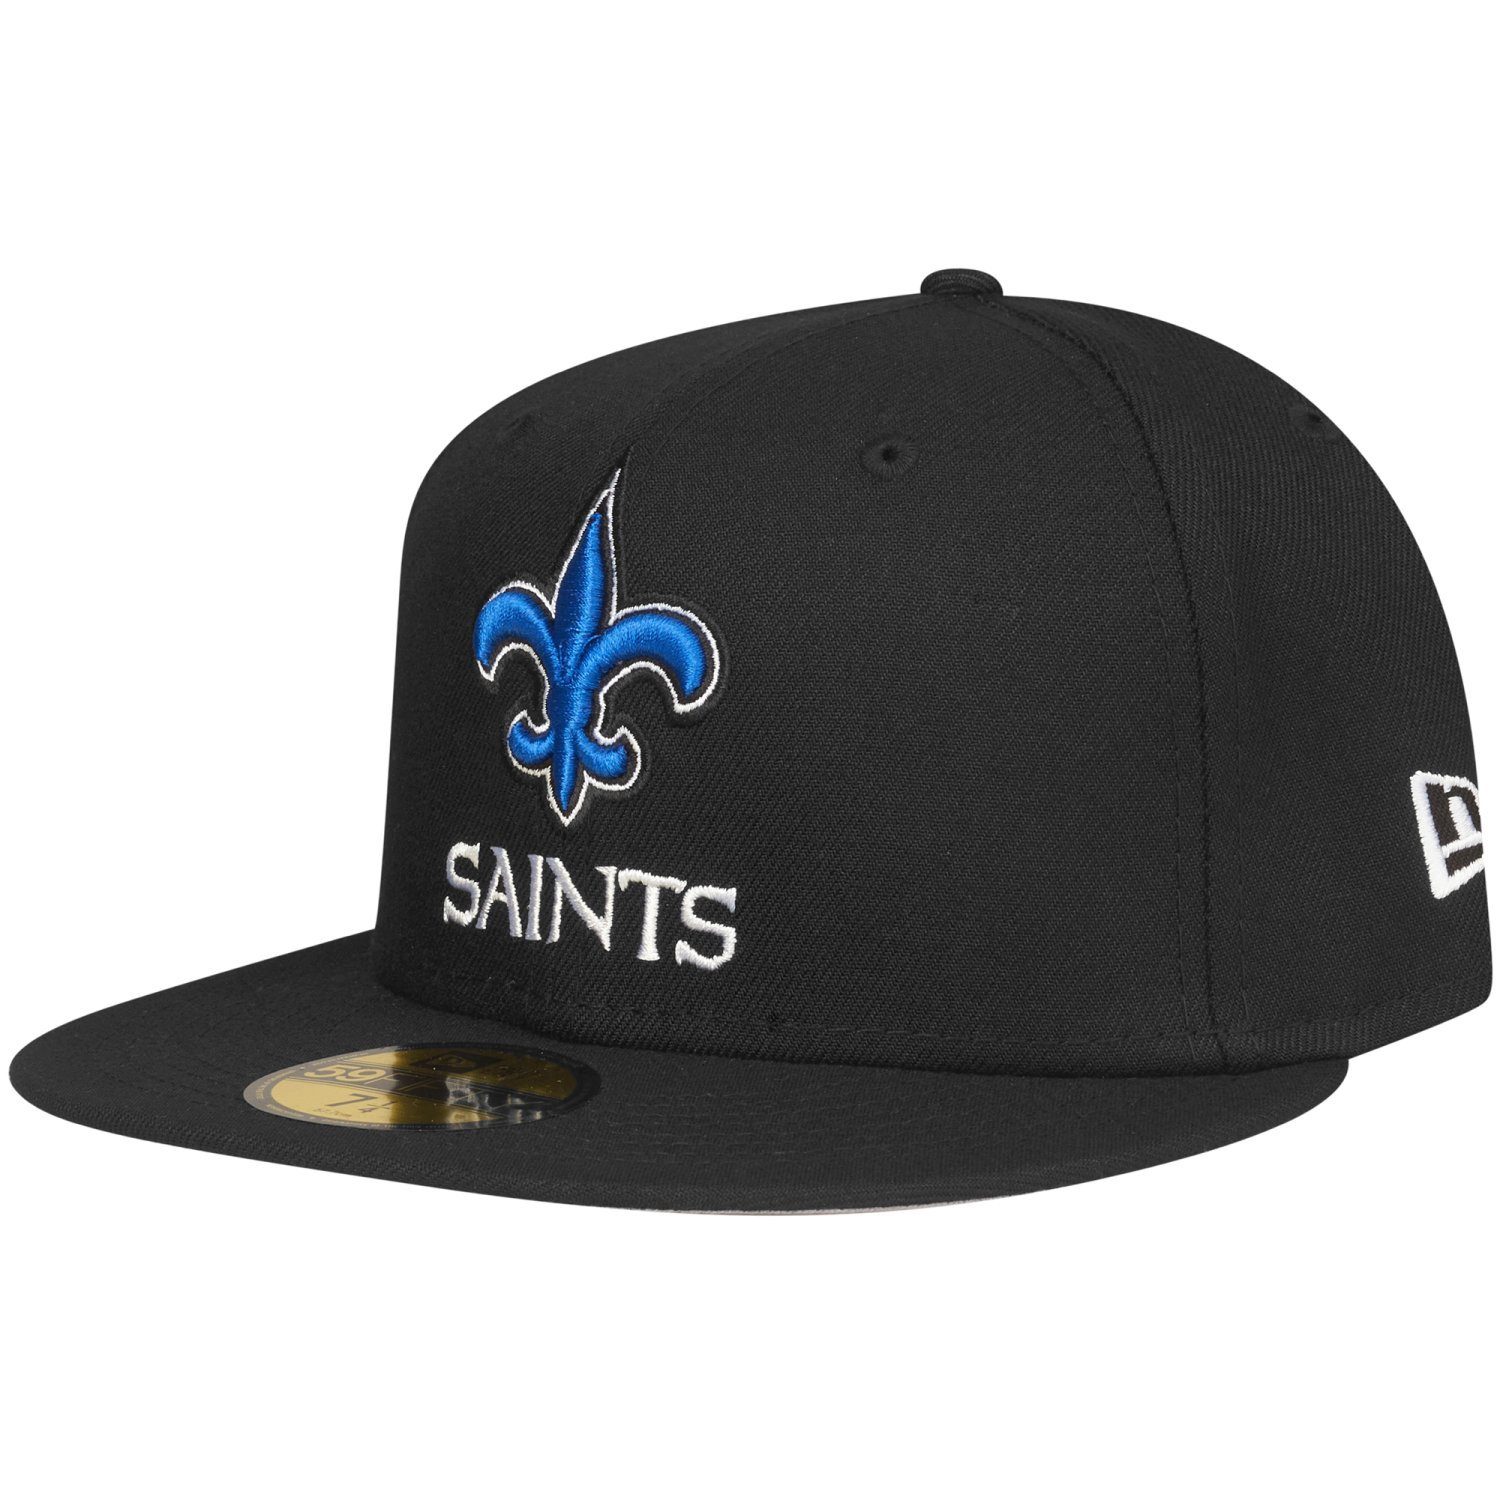 Beliebte Marken New Era Cap TEAMS Orleans 59Fifty New Saints NFL Fitted